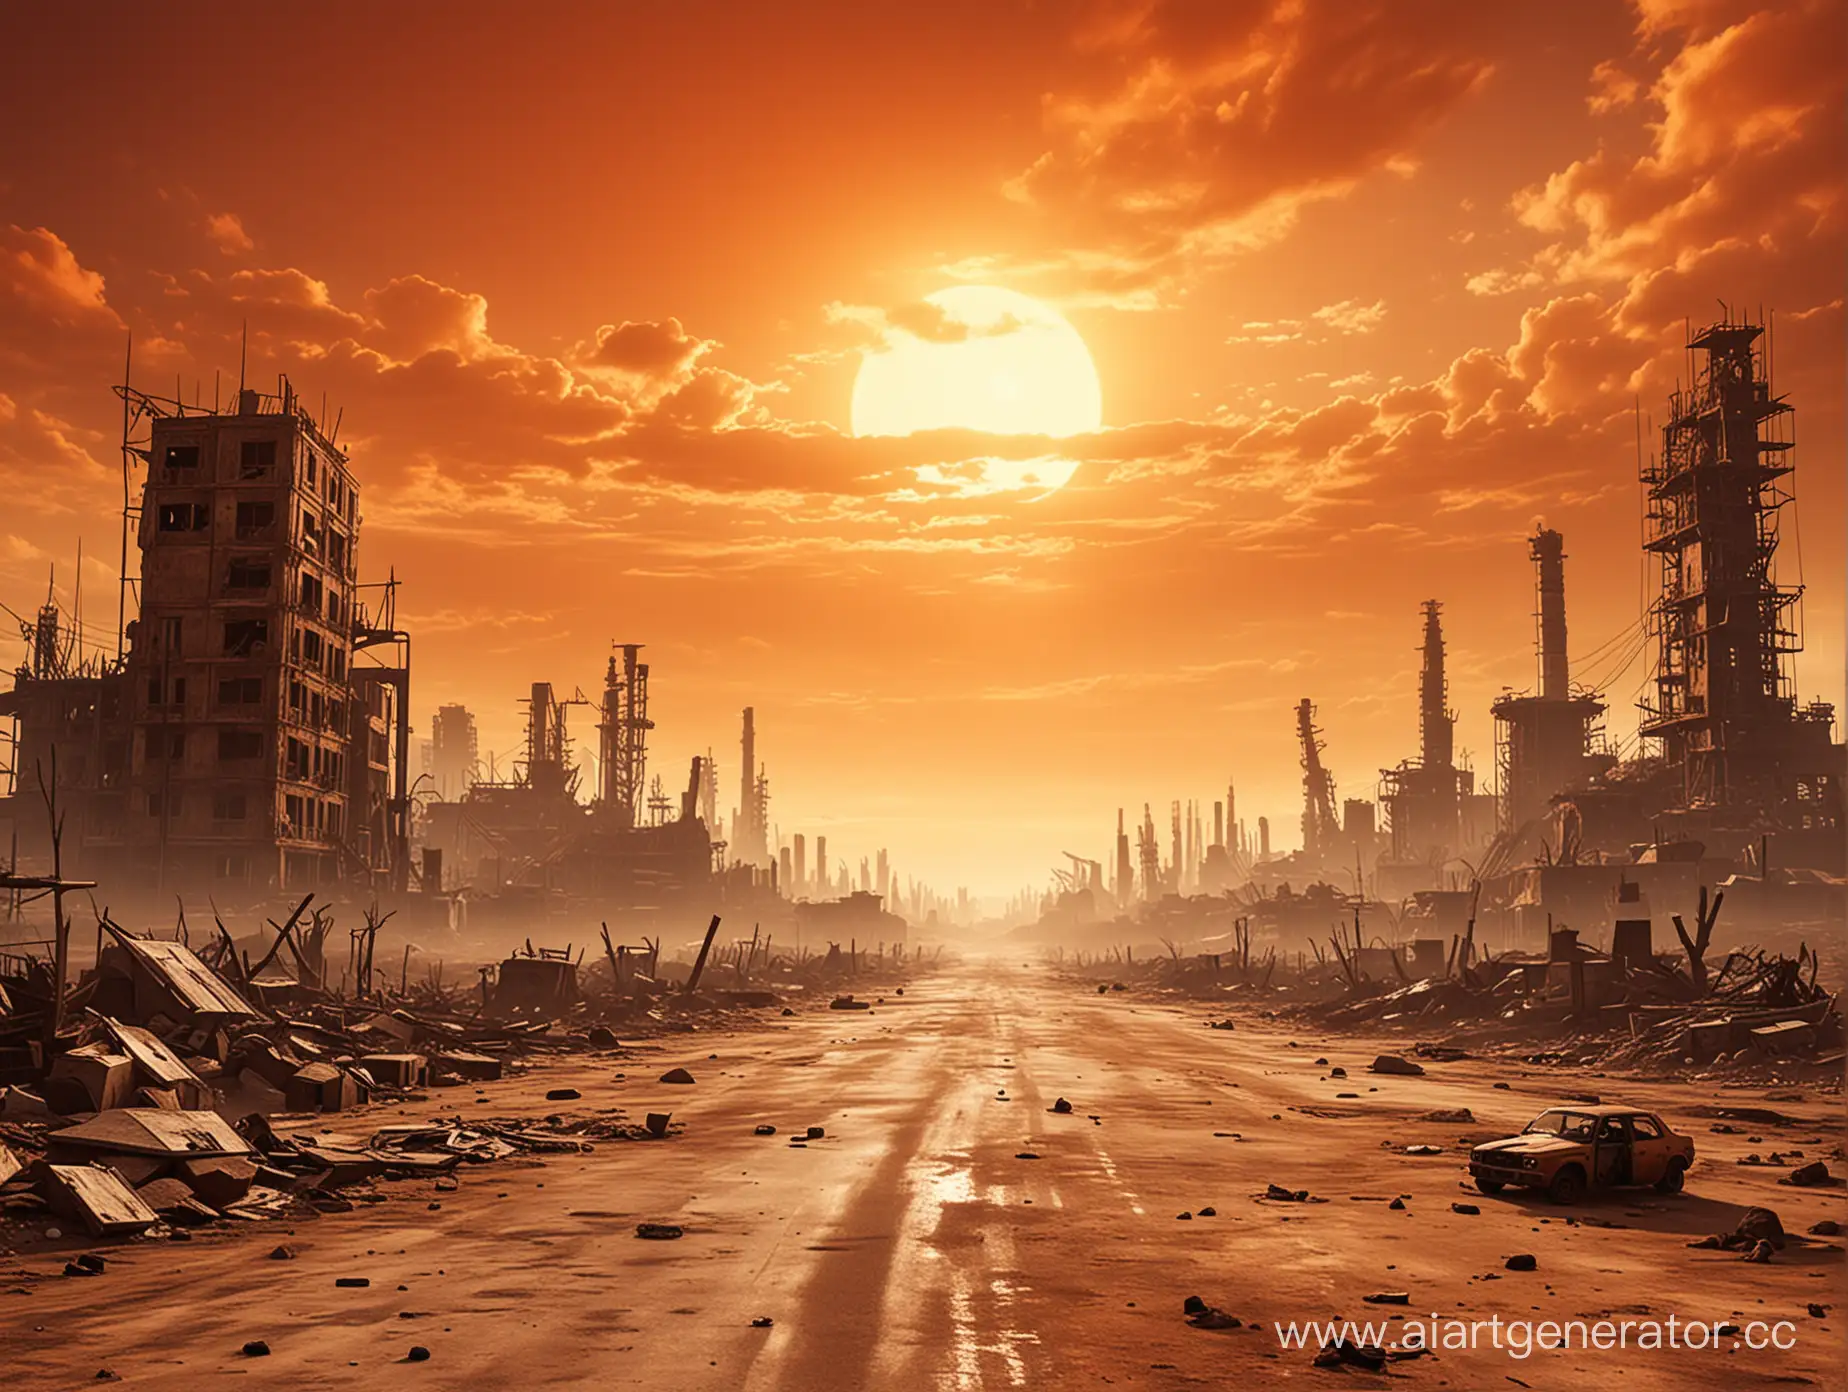 Post-Apocalyptic-World-with-Orange-Sky-Dystopian-Landscape-Art